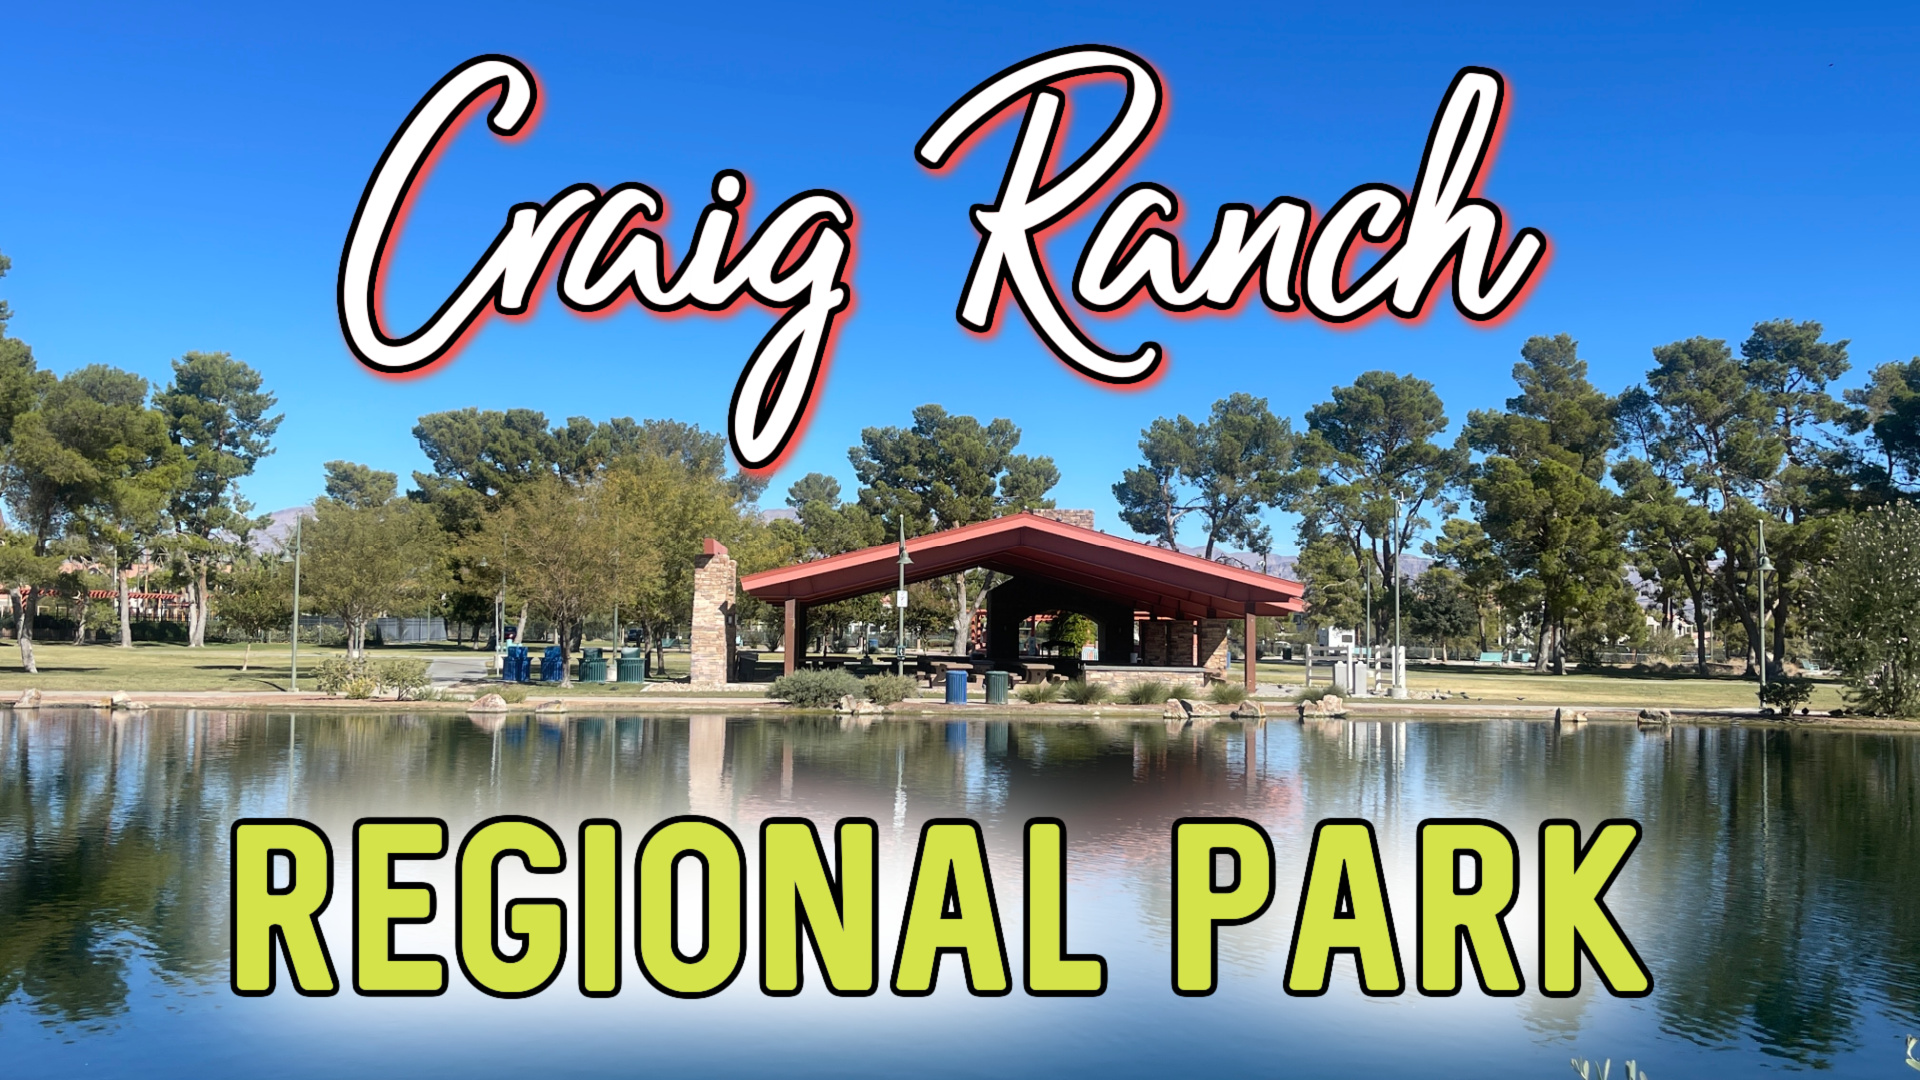 Craig Ranch Regional Park in North Las Vegas, NV